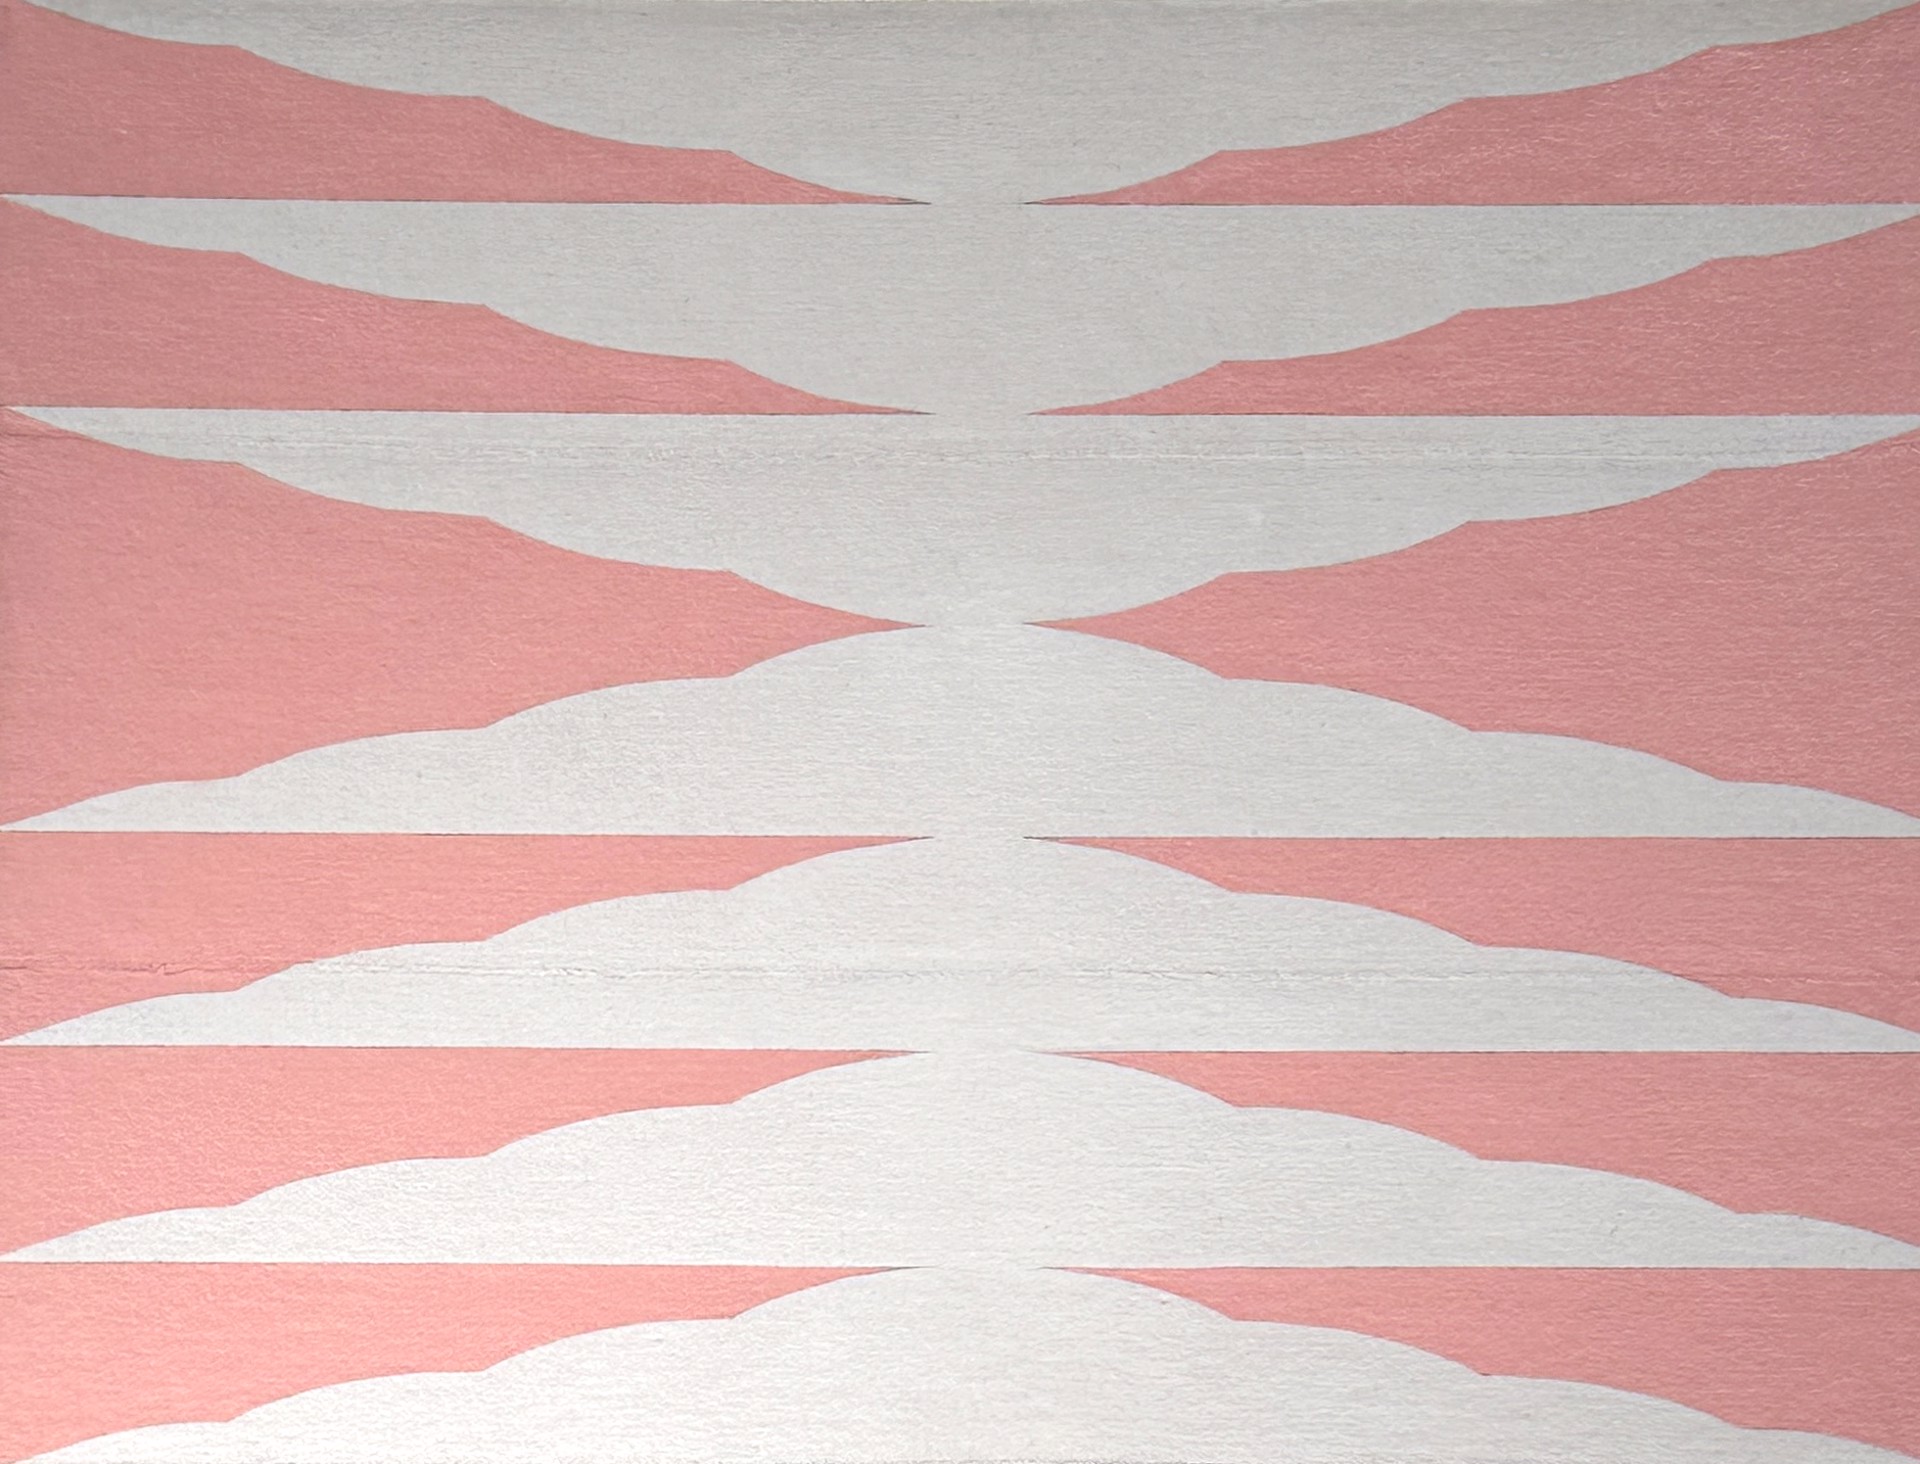 7 Clouds (Pink Reversed) by Matt Messinger